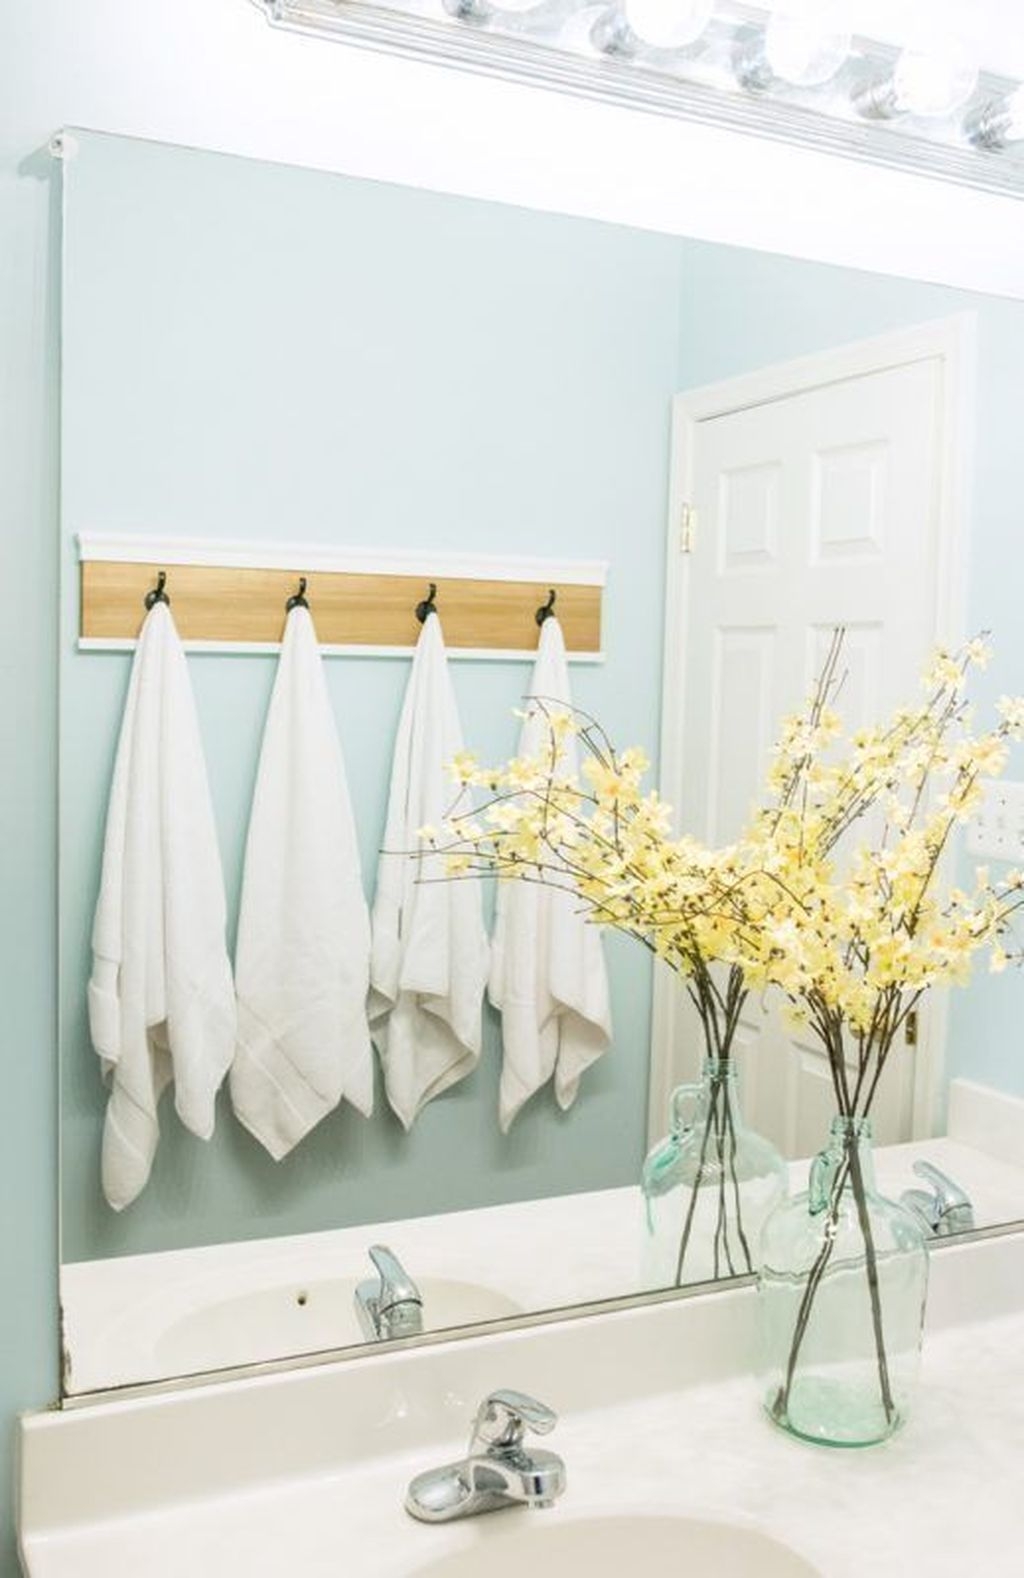 Affordable Towel Ideas For Best Bathroom Inspiration 13